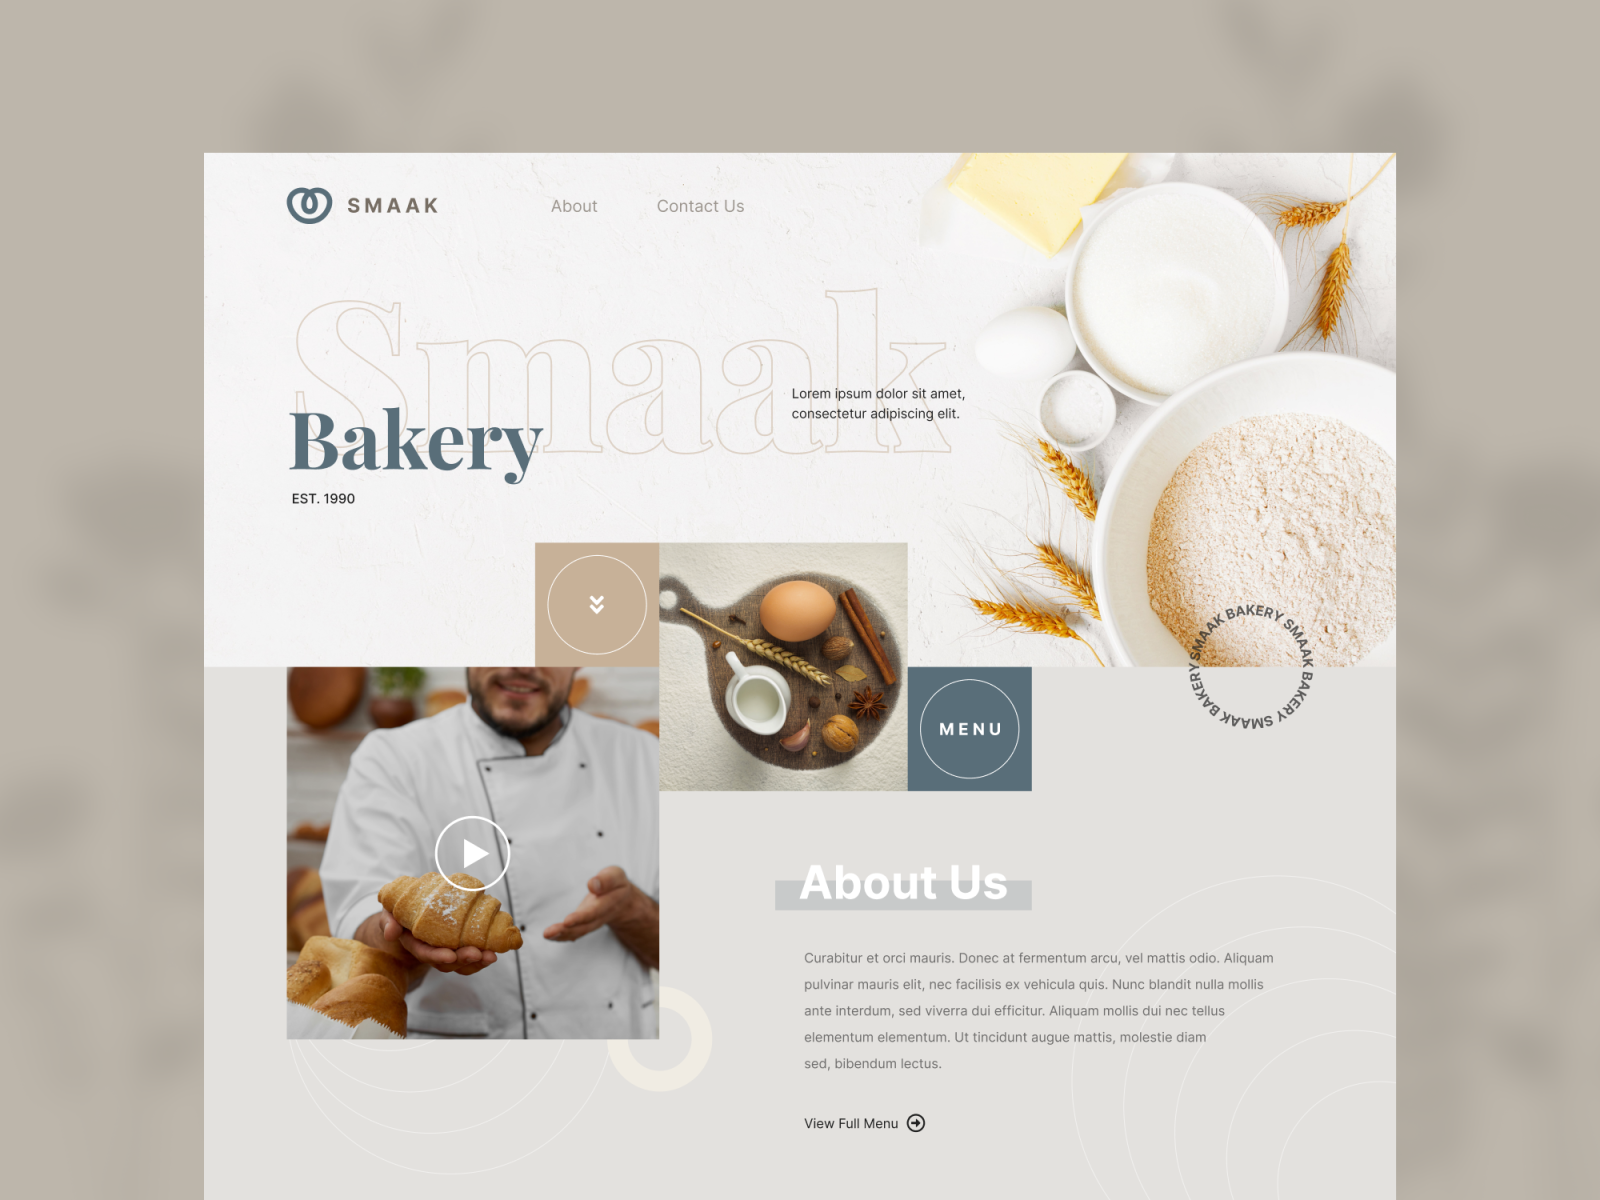 Cake Shop Website Design in Cheshire by Rabbitdigital